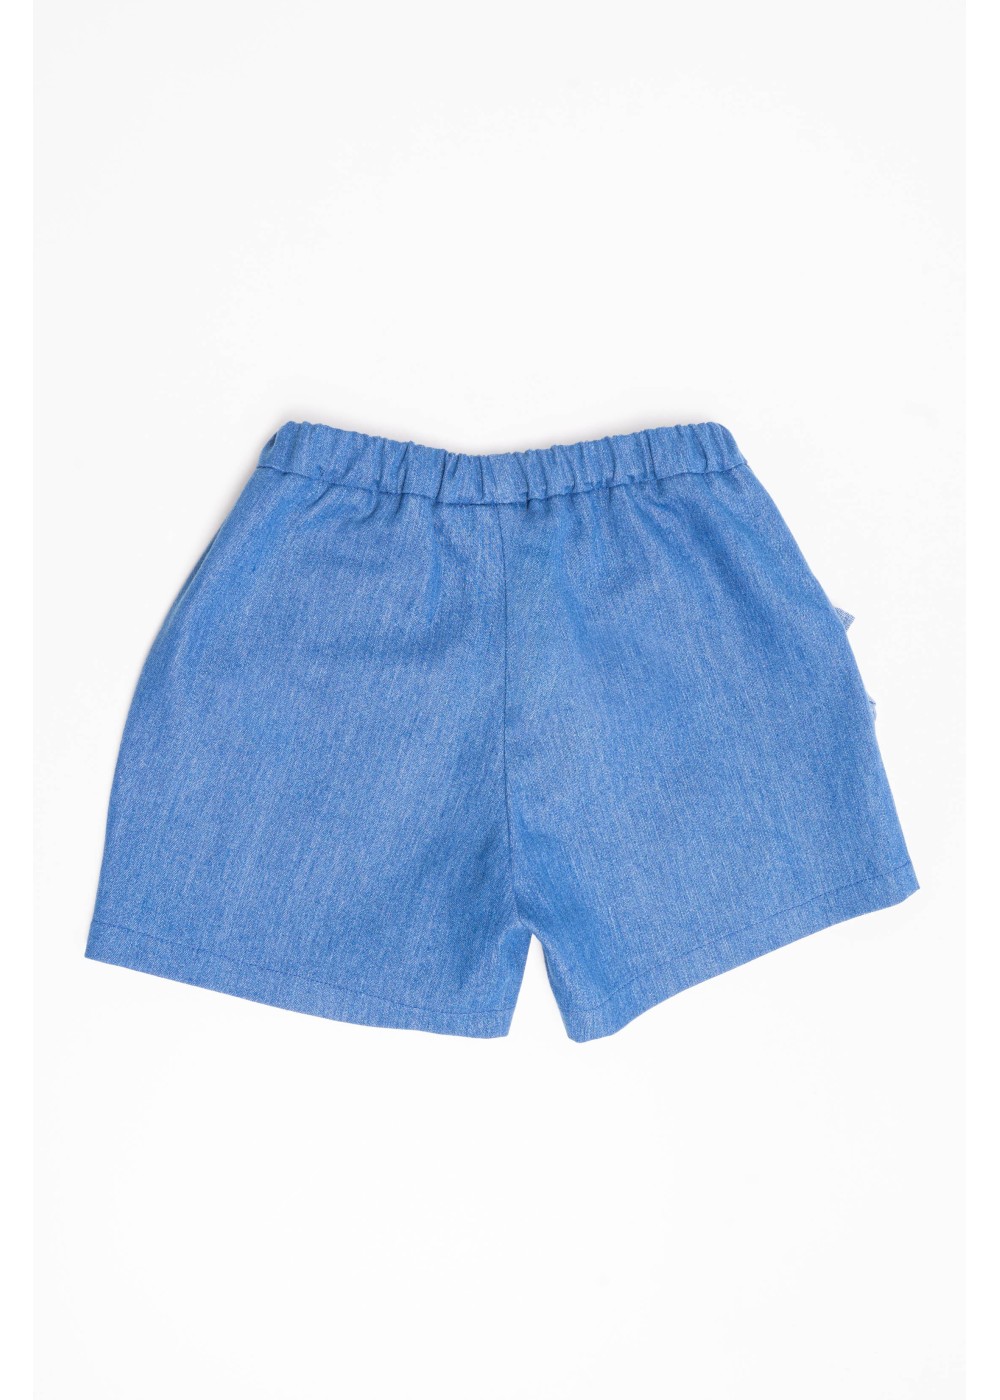 Short jeans Lara, denim short, blue, ruffled details